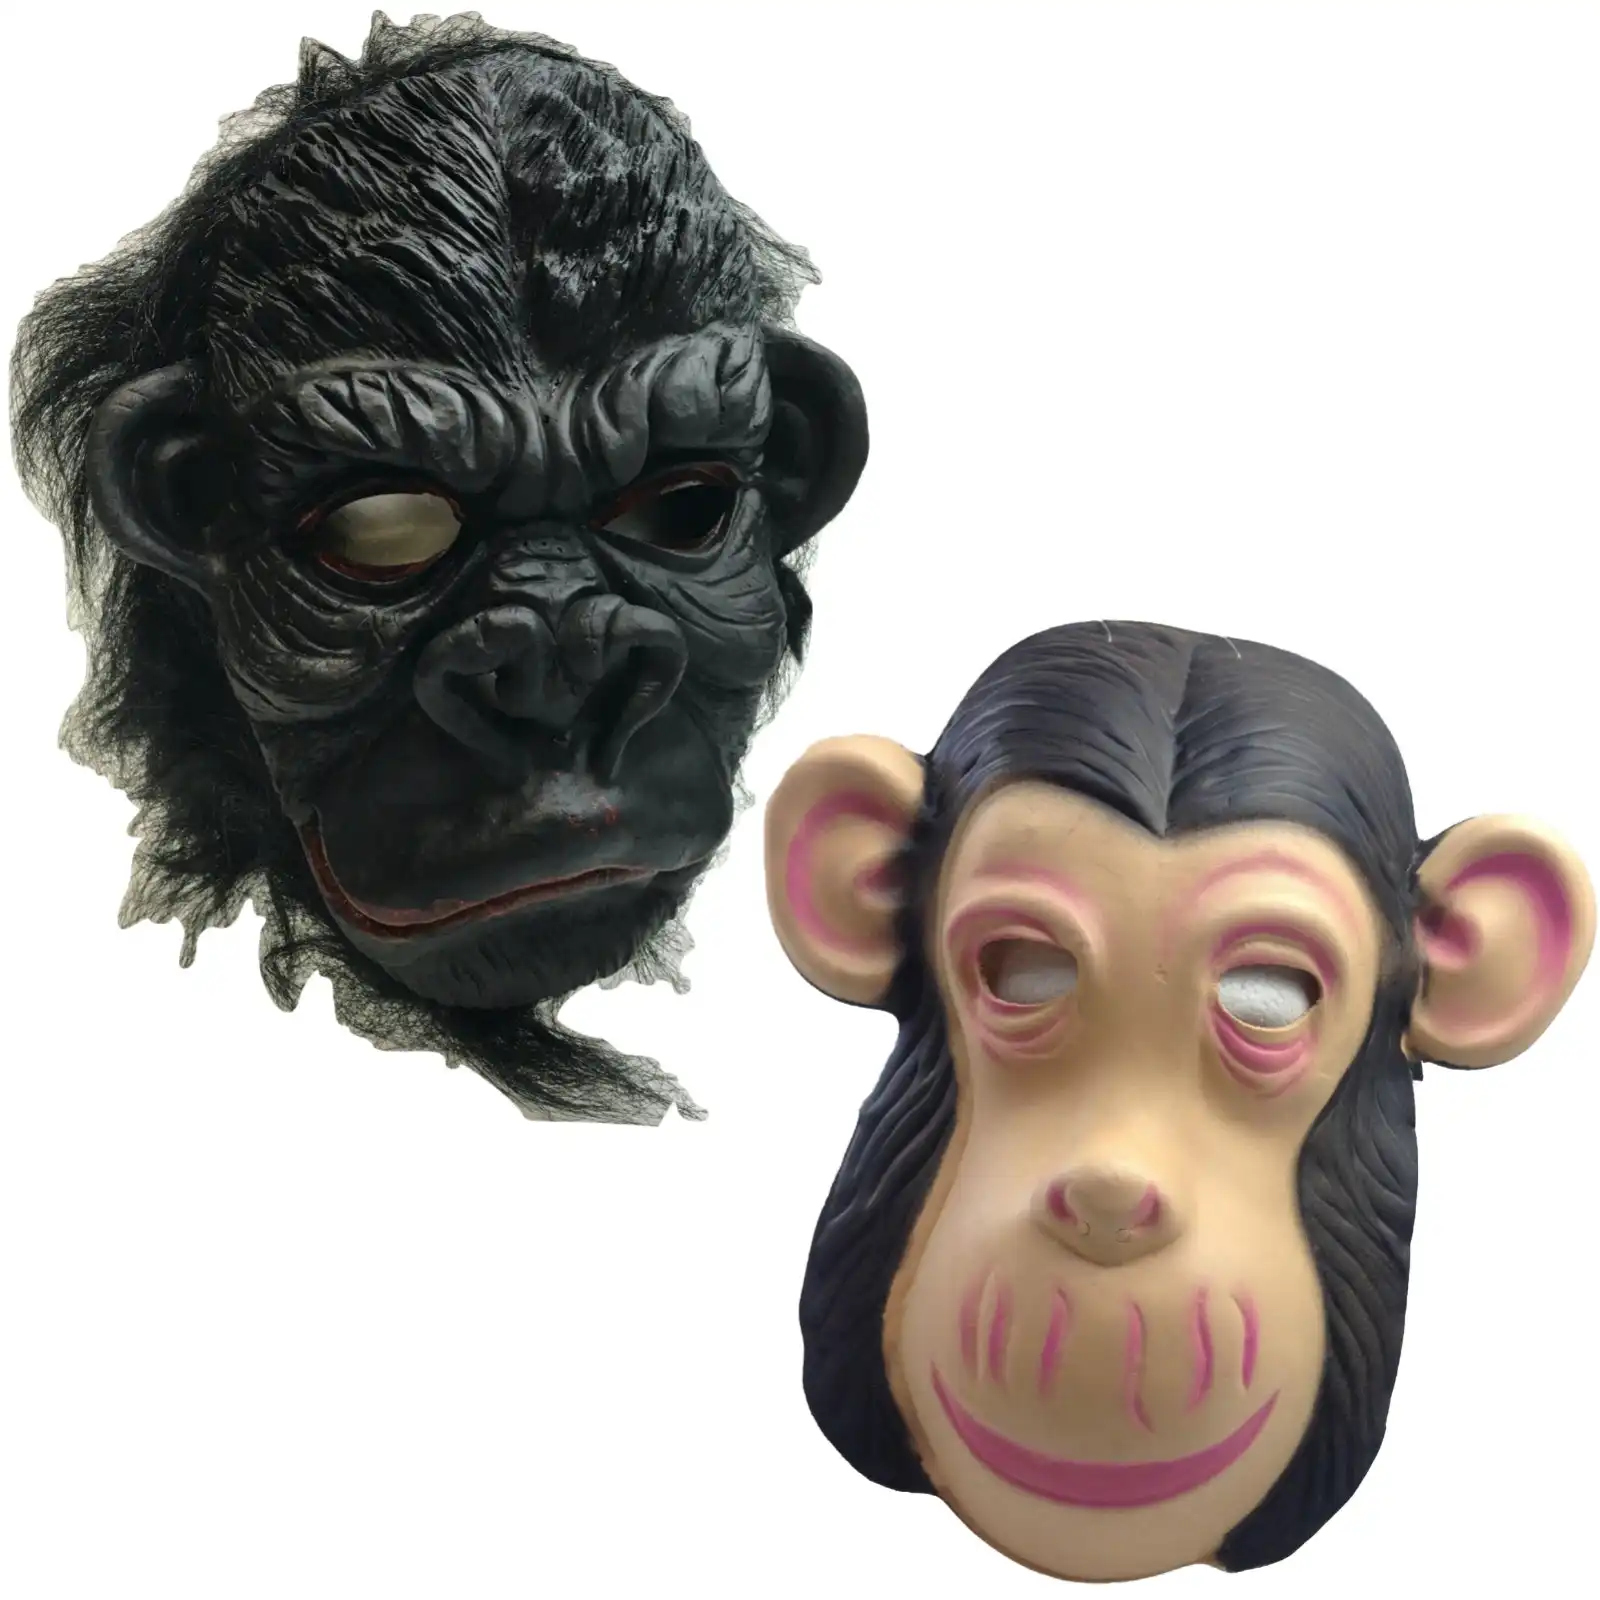 2pc Set Animal Masks Costume Party Gorilla Ape Chimp Monkey Halloween Novelty